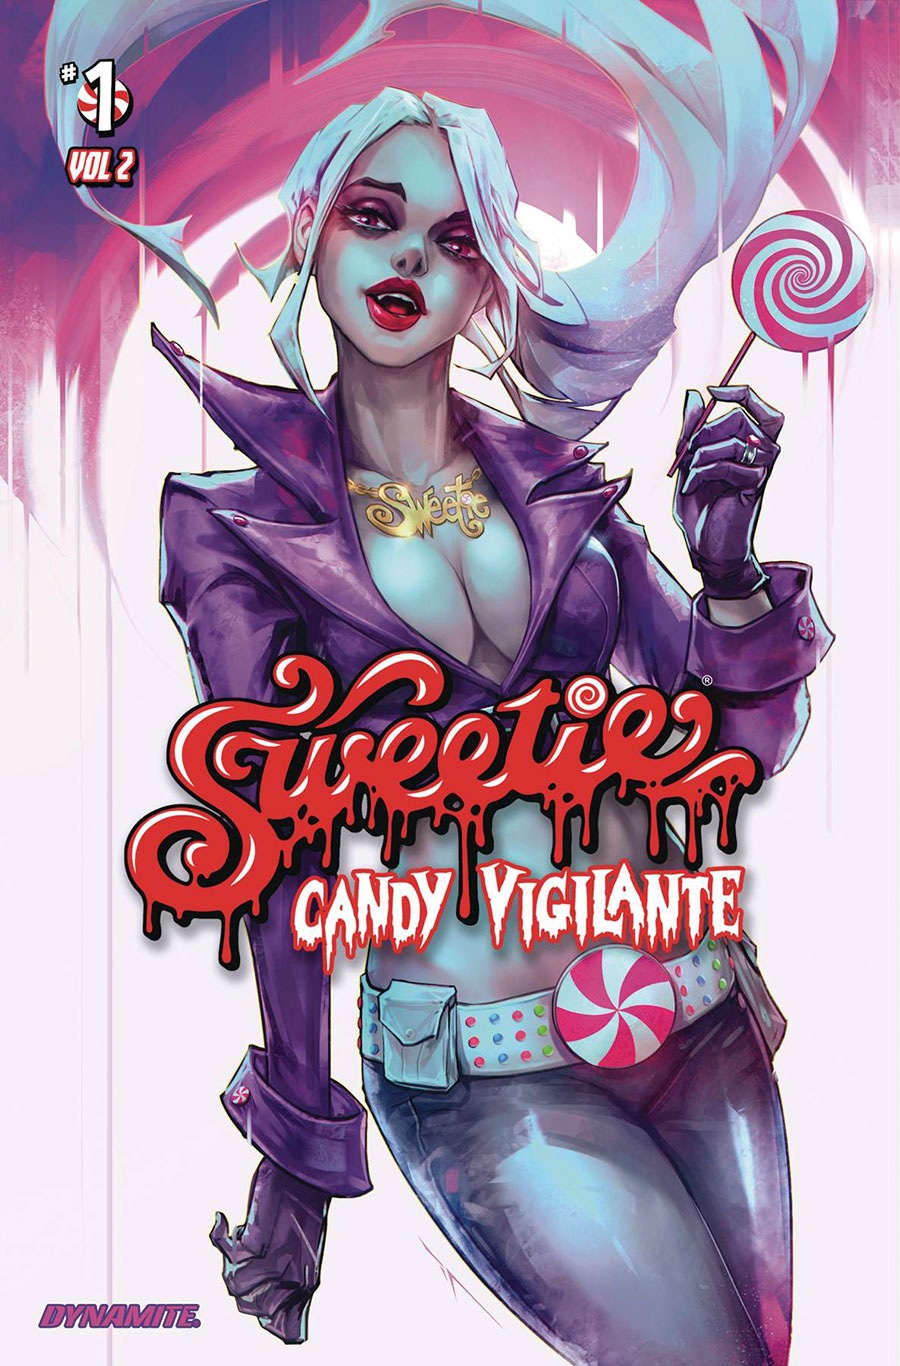 Sweetie Candy Vigilante Vol 2 #1 Cover B Variant Ivan Tao Cover